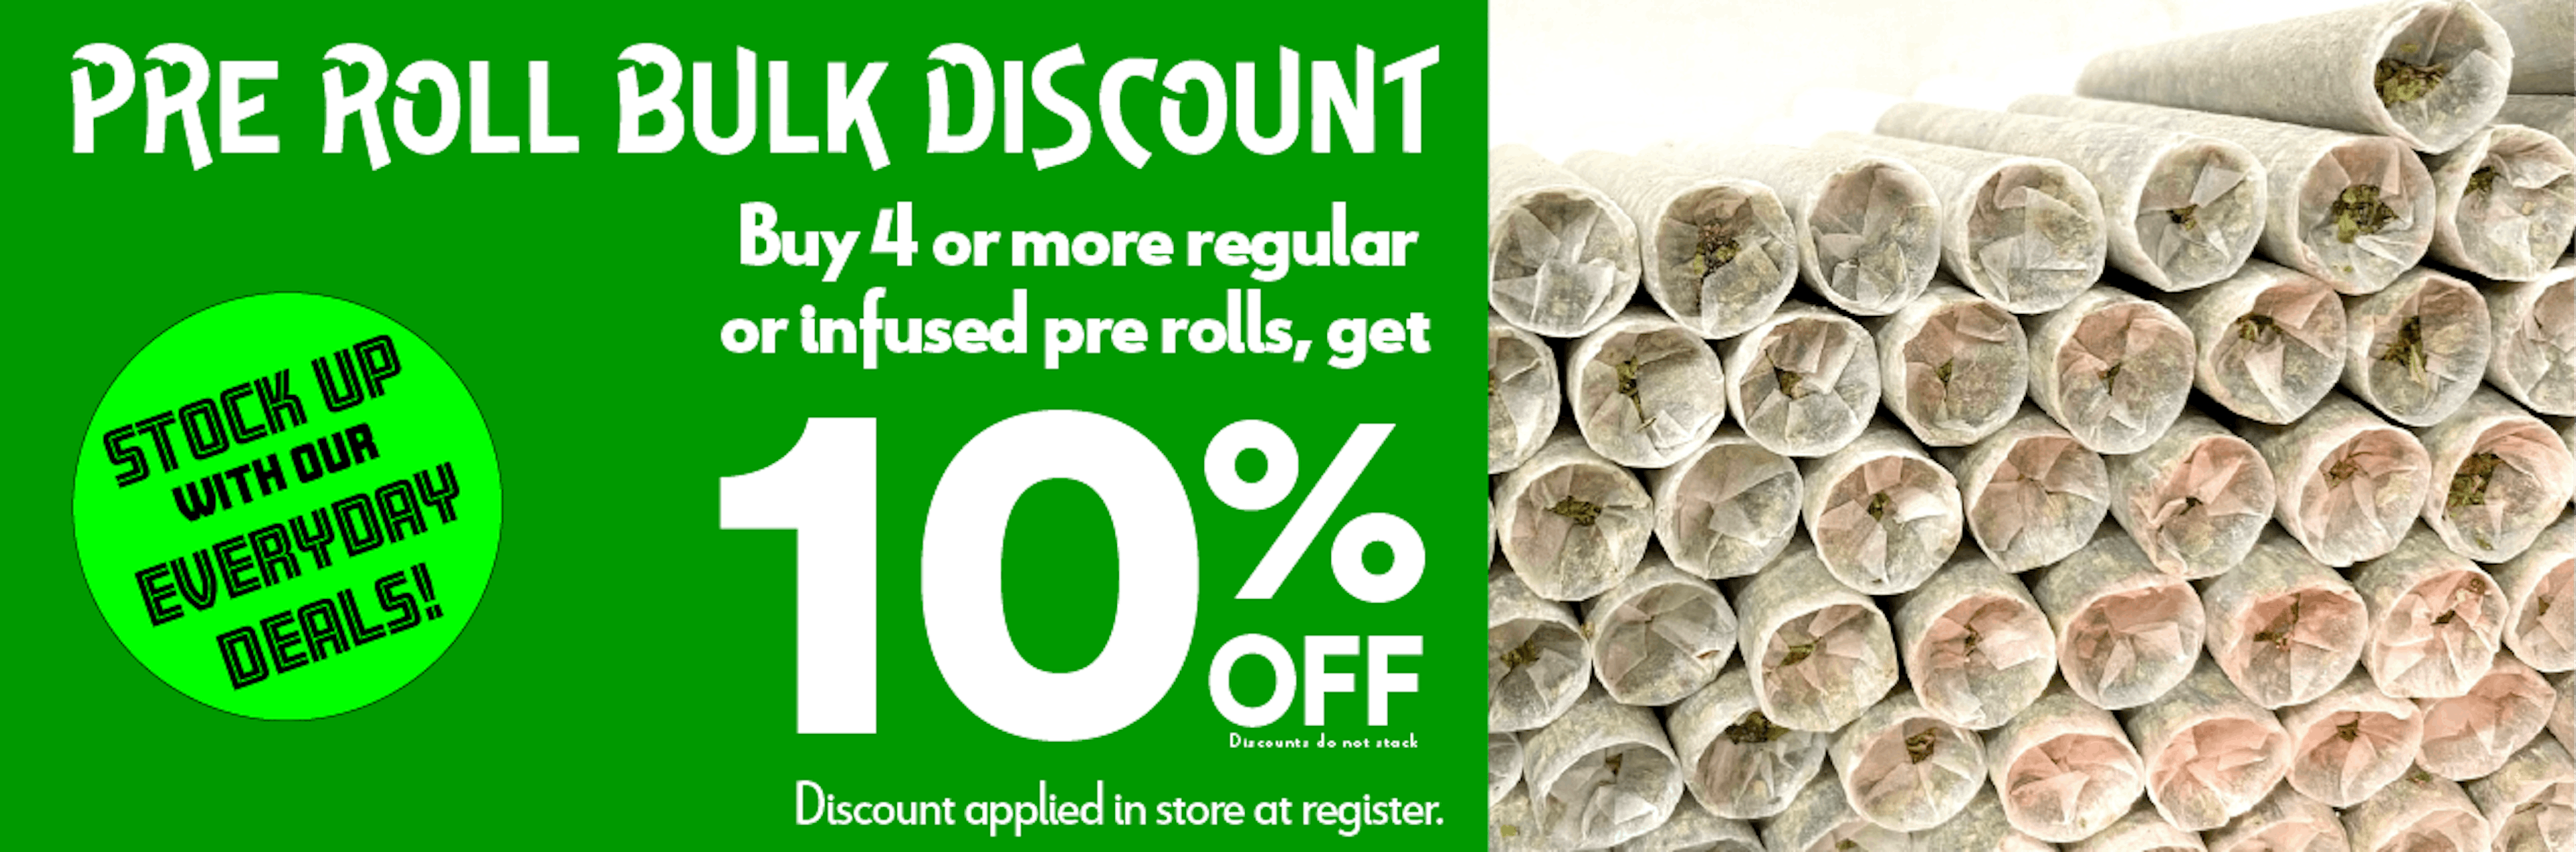 Buy 4+ infused or regular pre rolls, get 10% off!